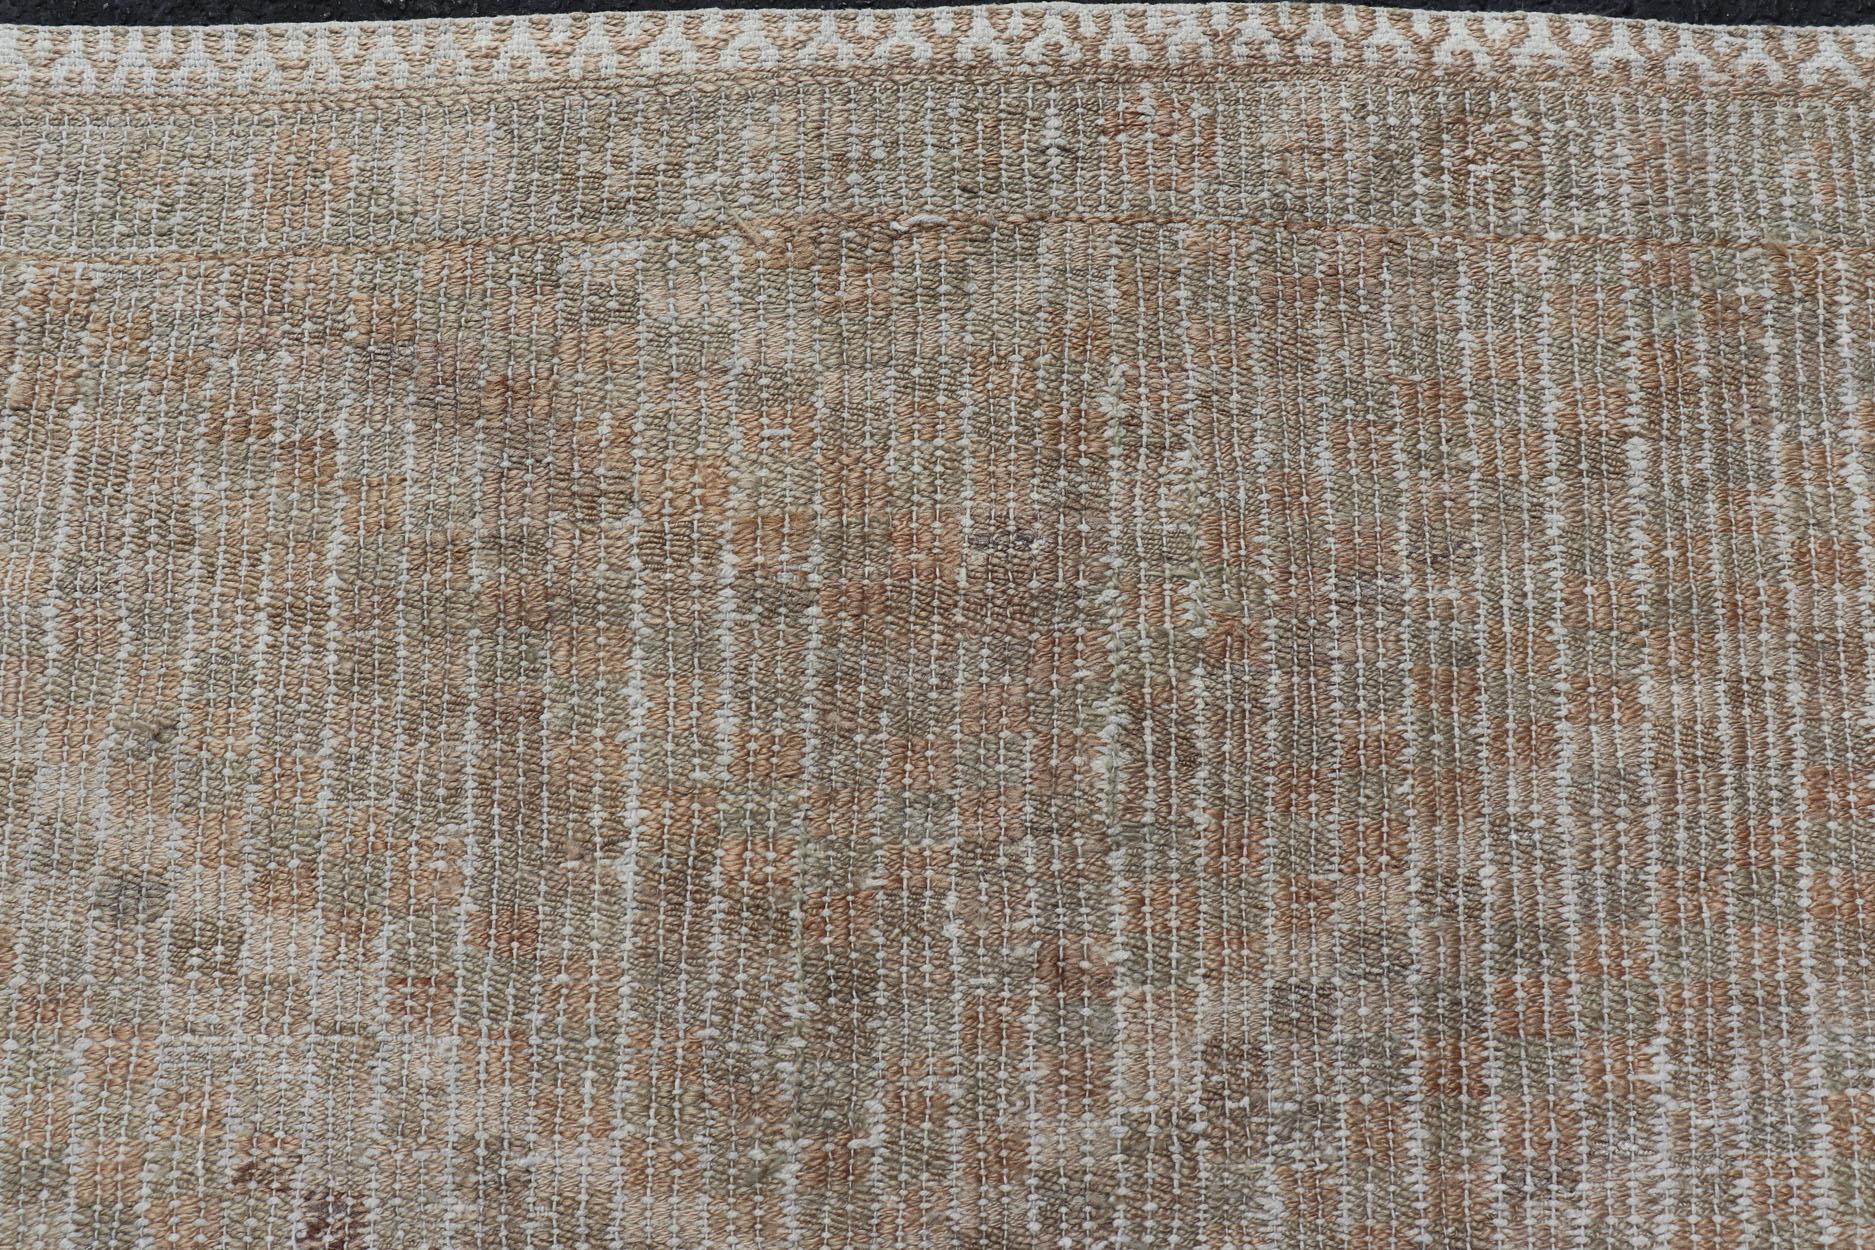 Vintage Turkish Embroidered Flat-Weave Rug Diamond Shape Geometric Design. Country of Origin: Turkey; Type: Kilim; Design: Diamond; Keivan Woven Arts: rug EN-176989; Mid-29th Century 

Measures: 4' x 5'1 

This hand-woven Kilim features muted shades